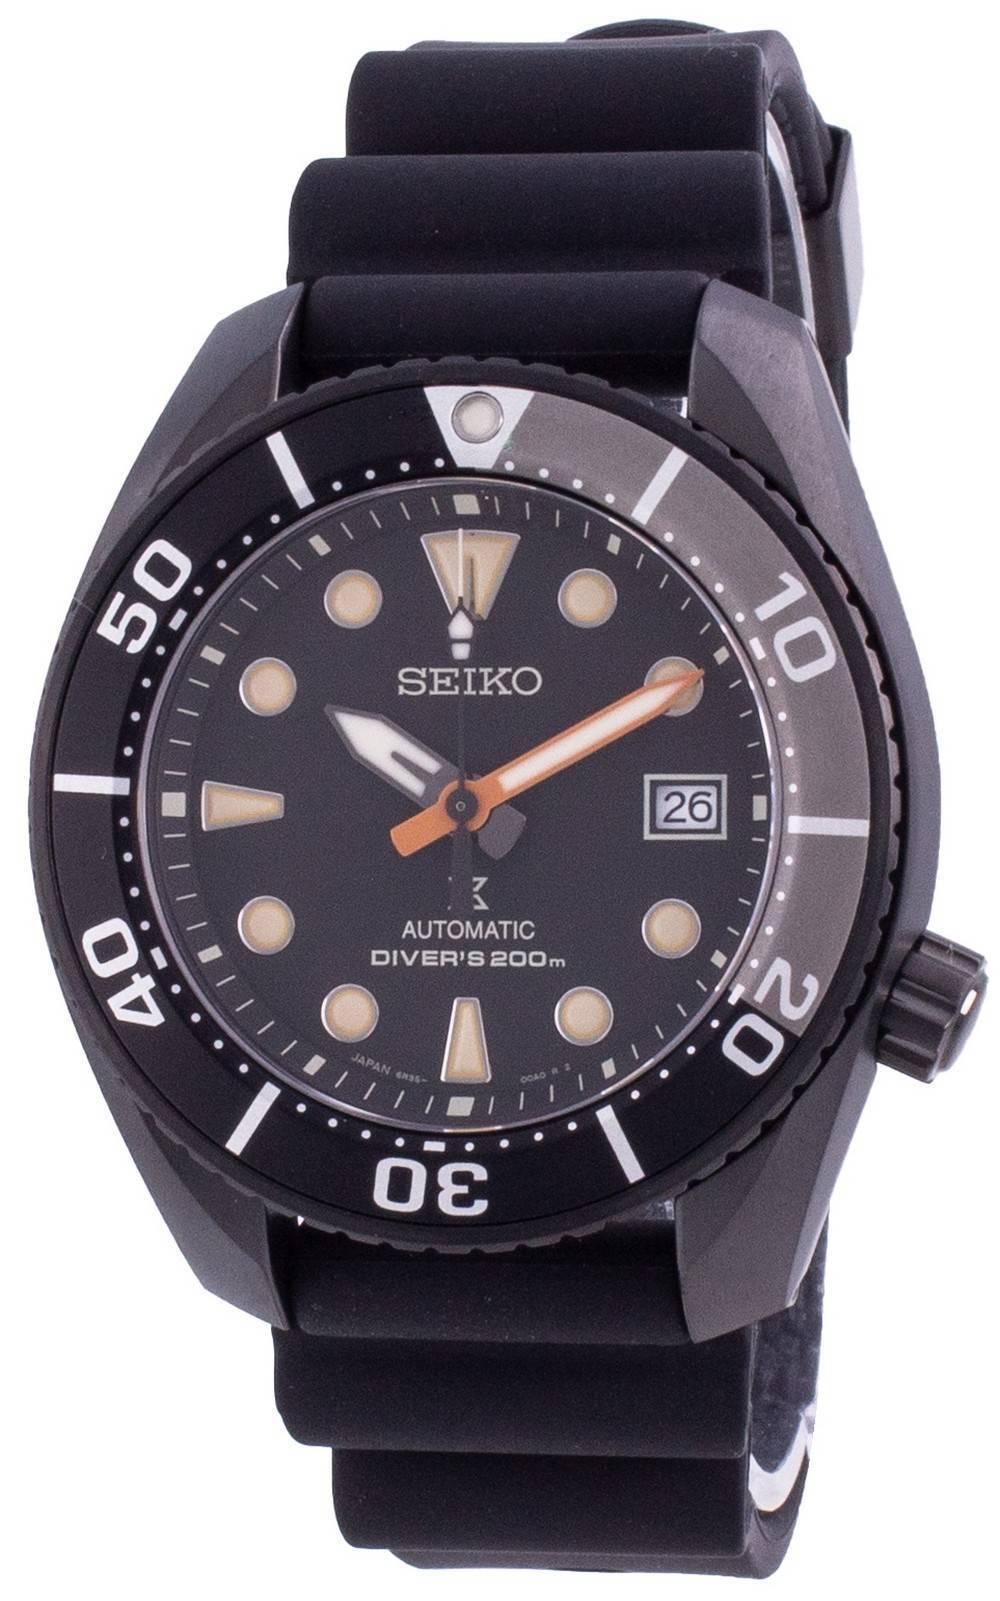 Đồng hồ nam Seiko Prospex Automatic Diver's Sumo SPB125 SPB125J1 SPB125J  Phiên bản giới hạn 200M vi